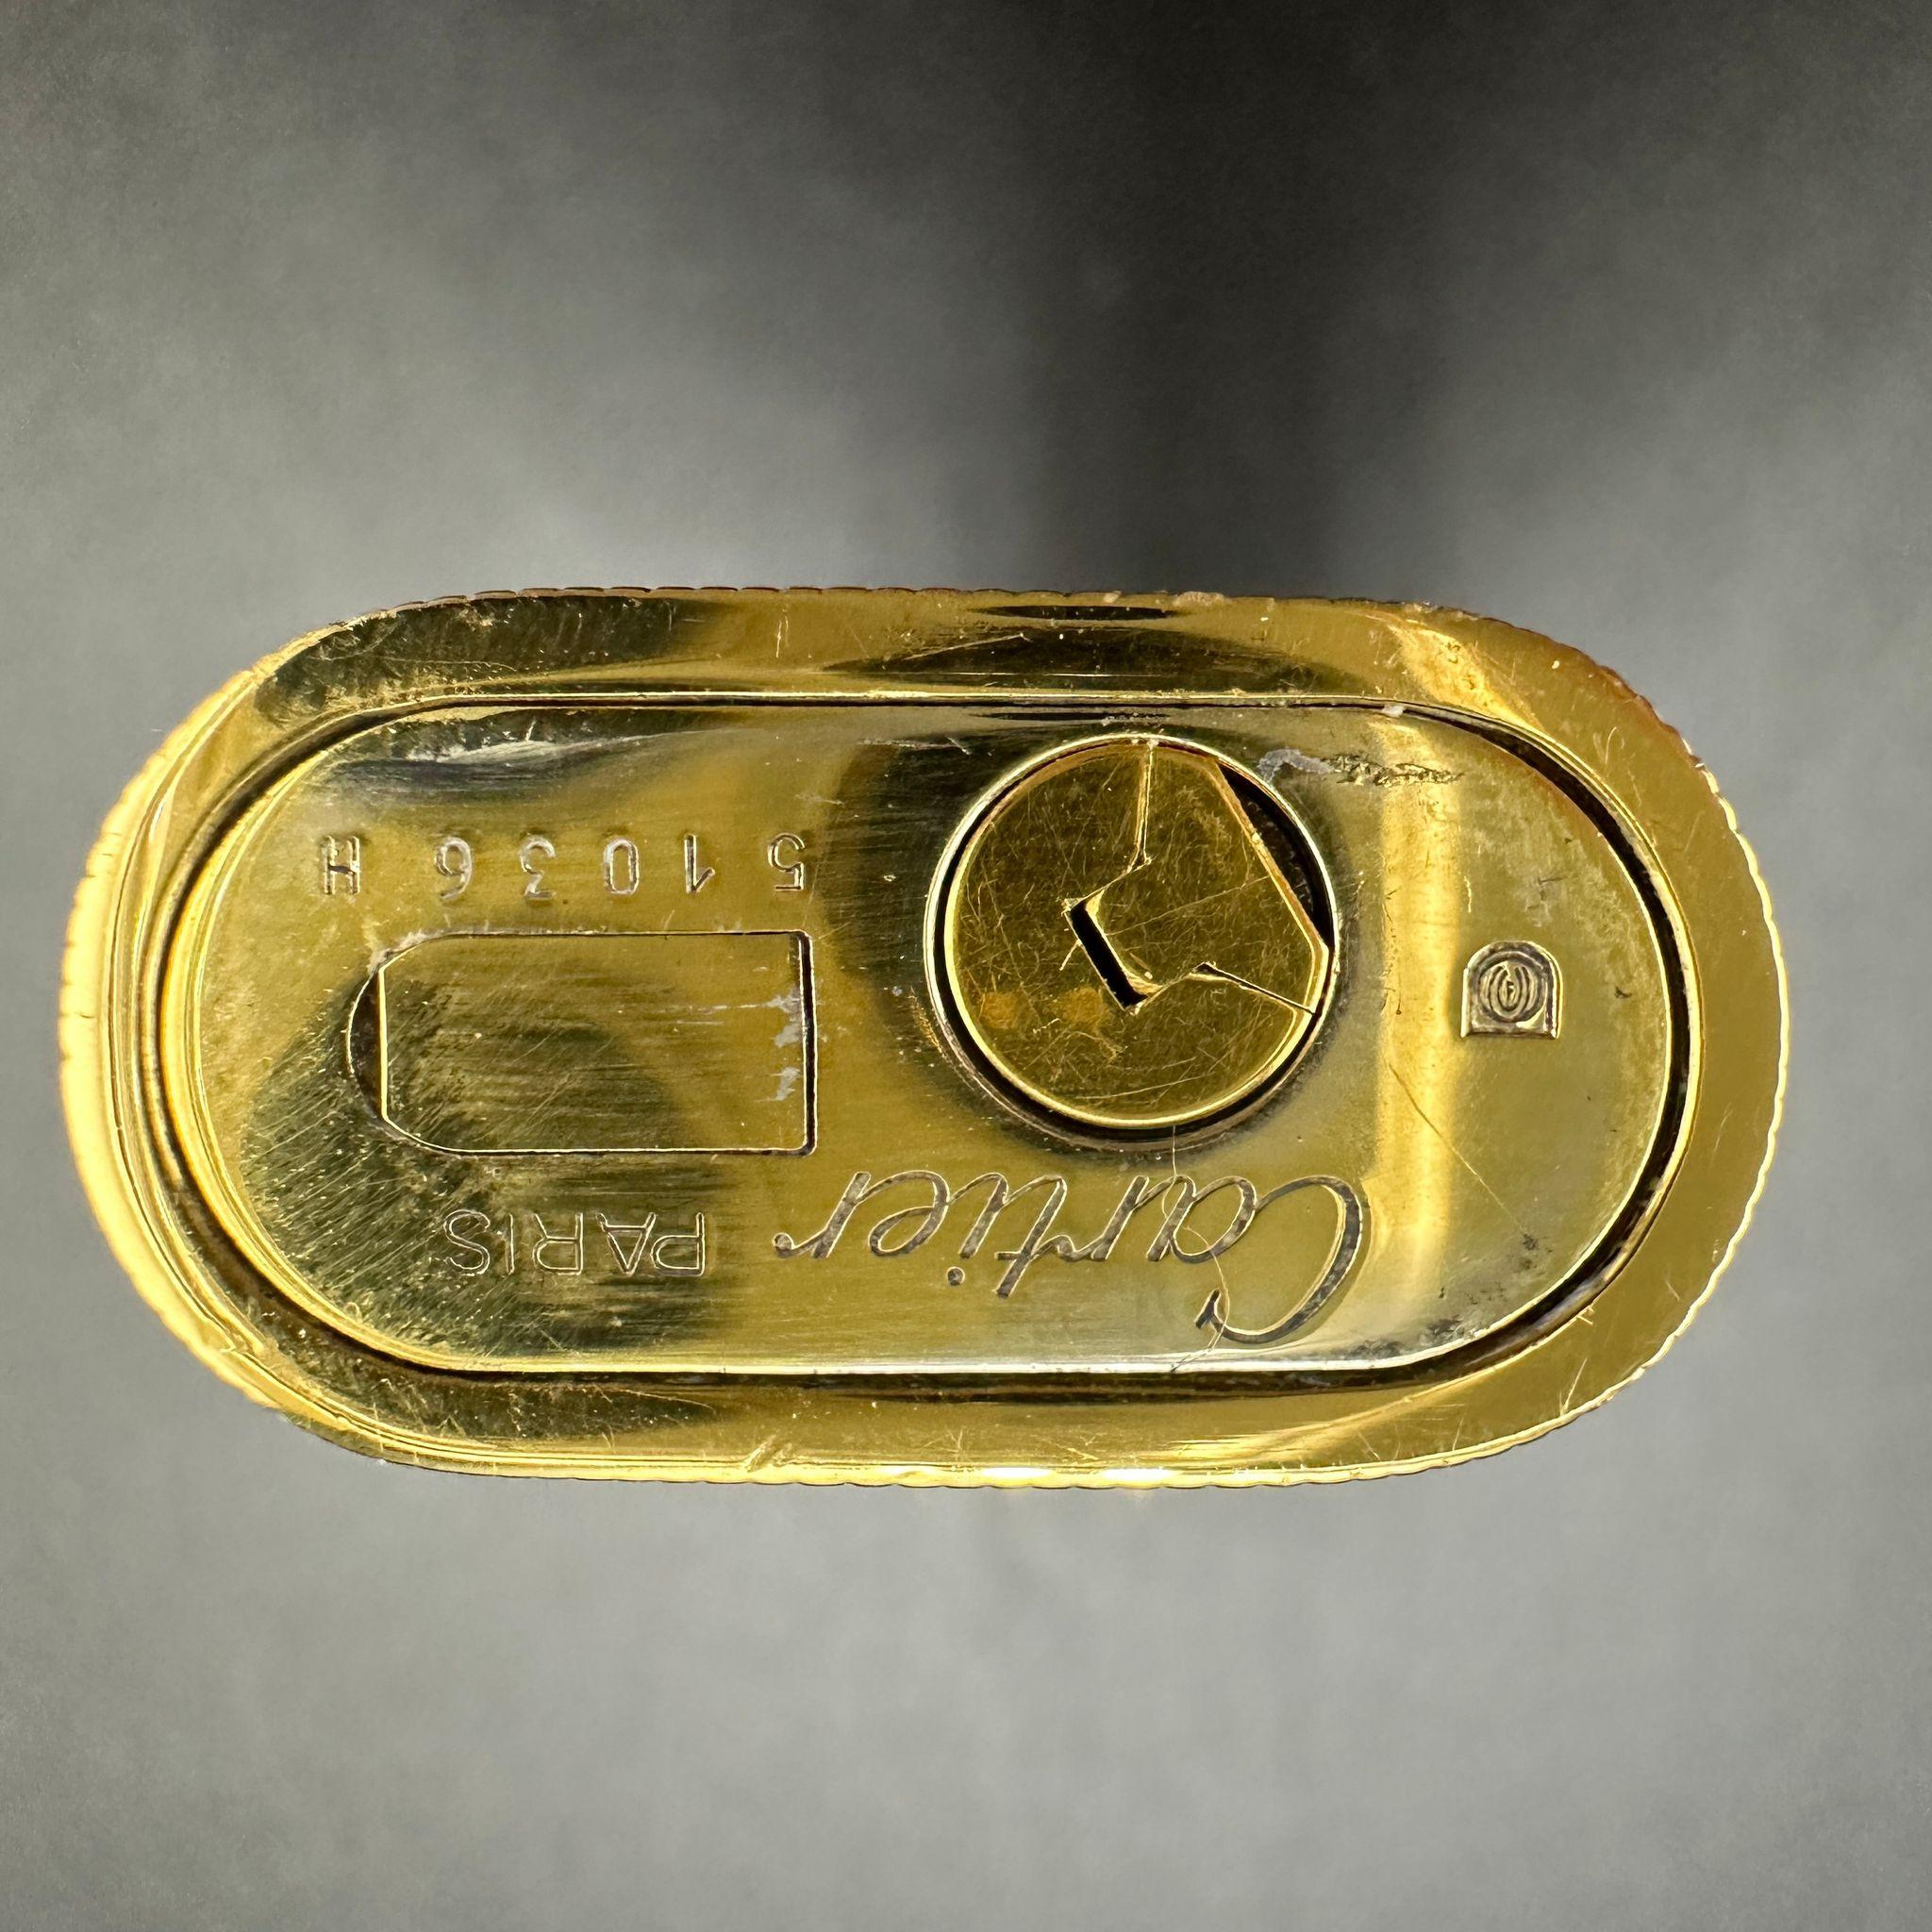 Le Must de Cartier Very Rare Royking Lighter, 18k Gold Plating & Enamel Inlay  2